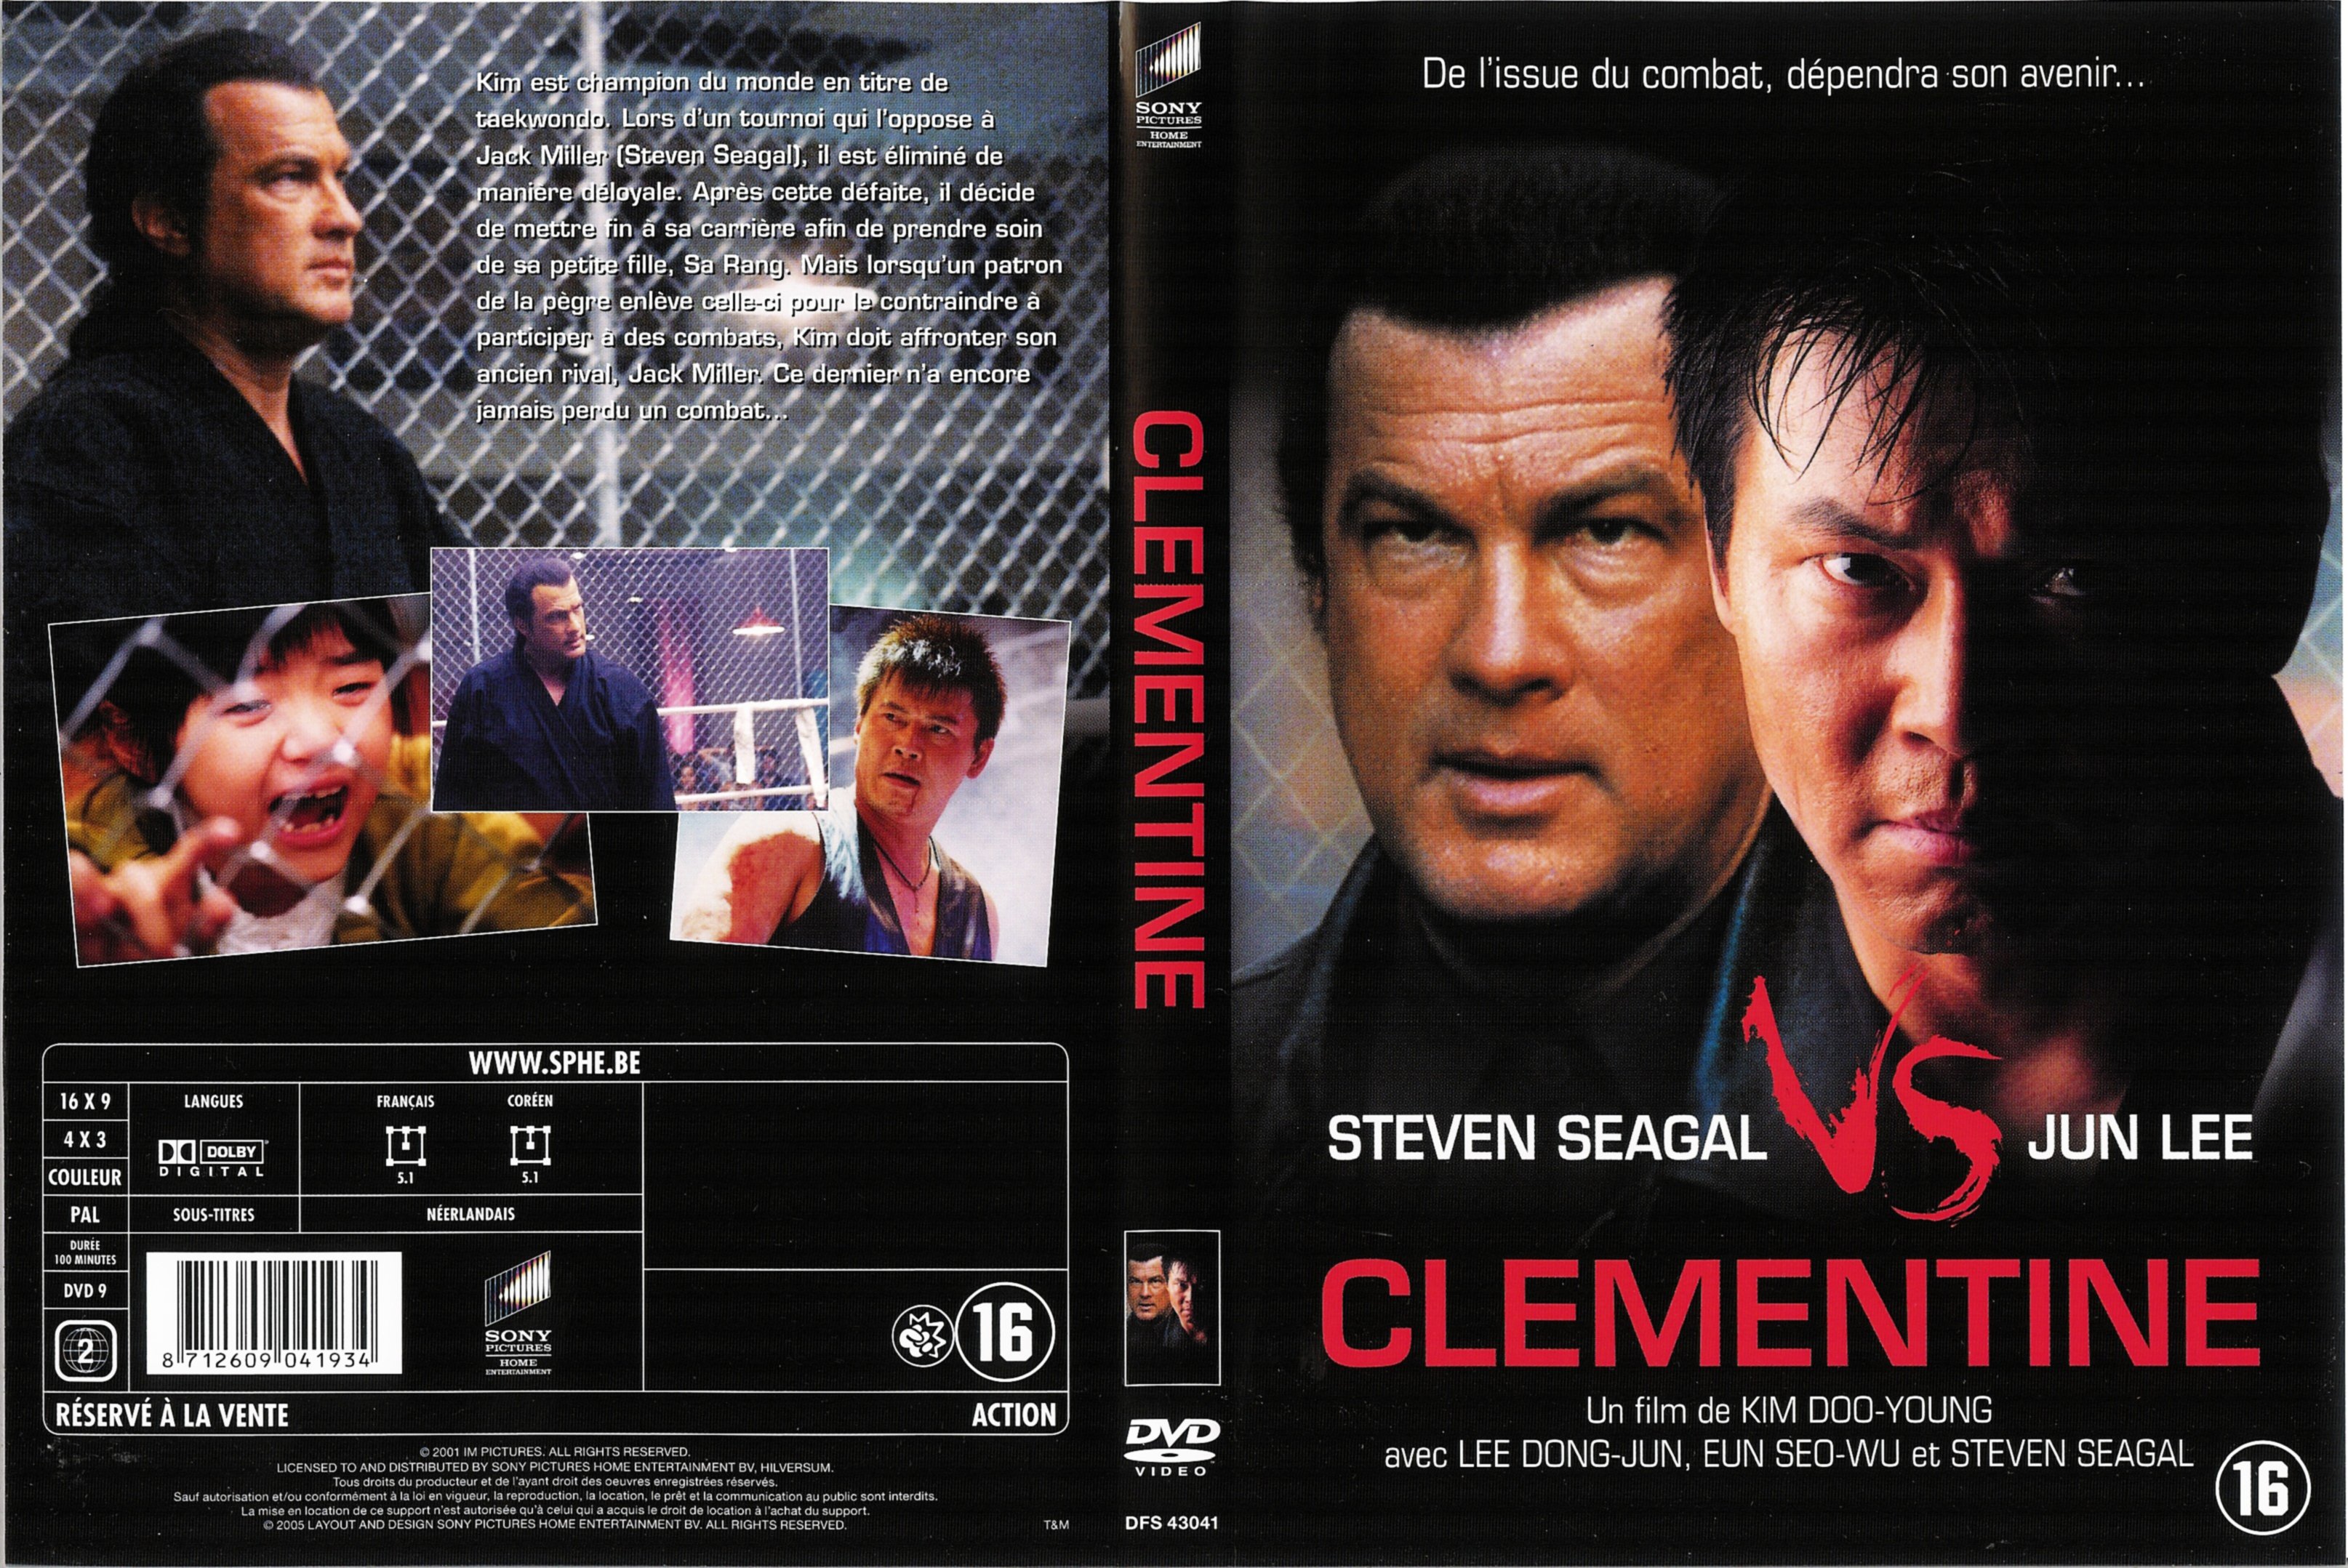 Jaquette DVD Clementine (Steven Seagal) v4